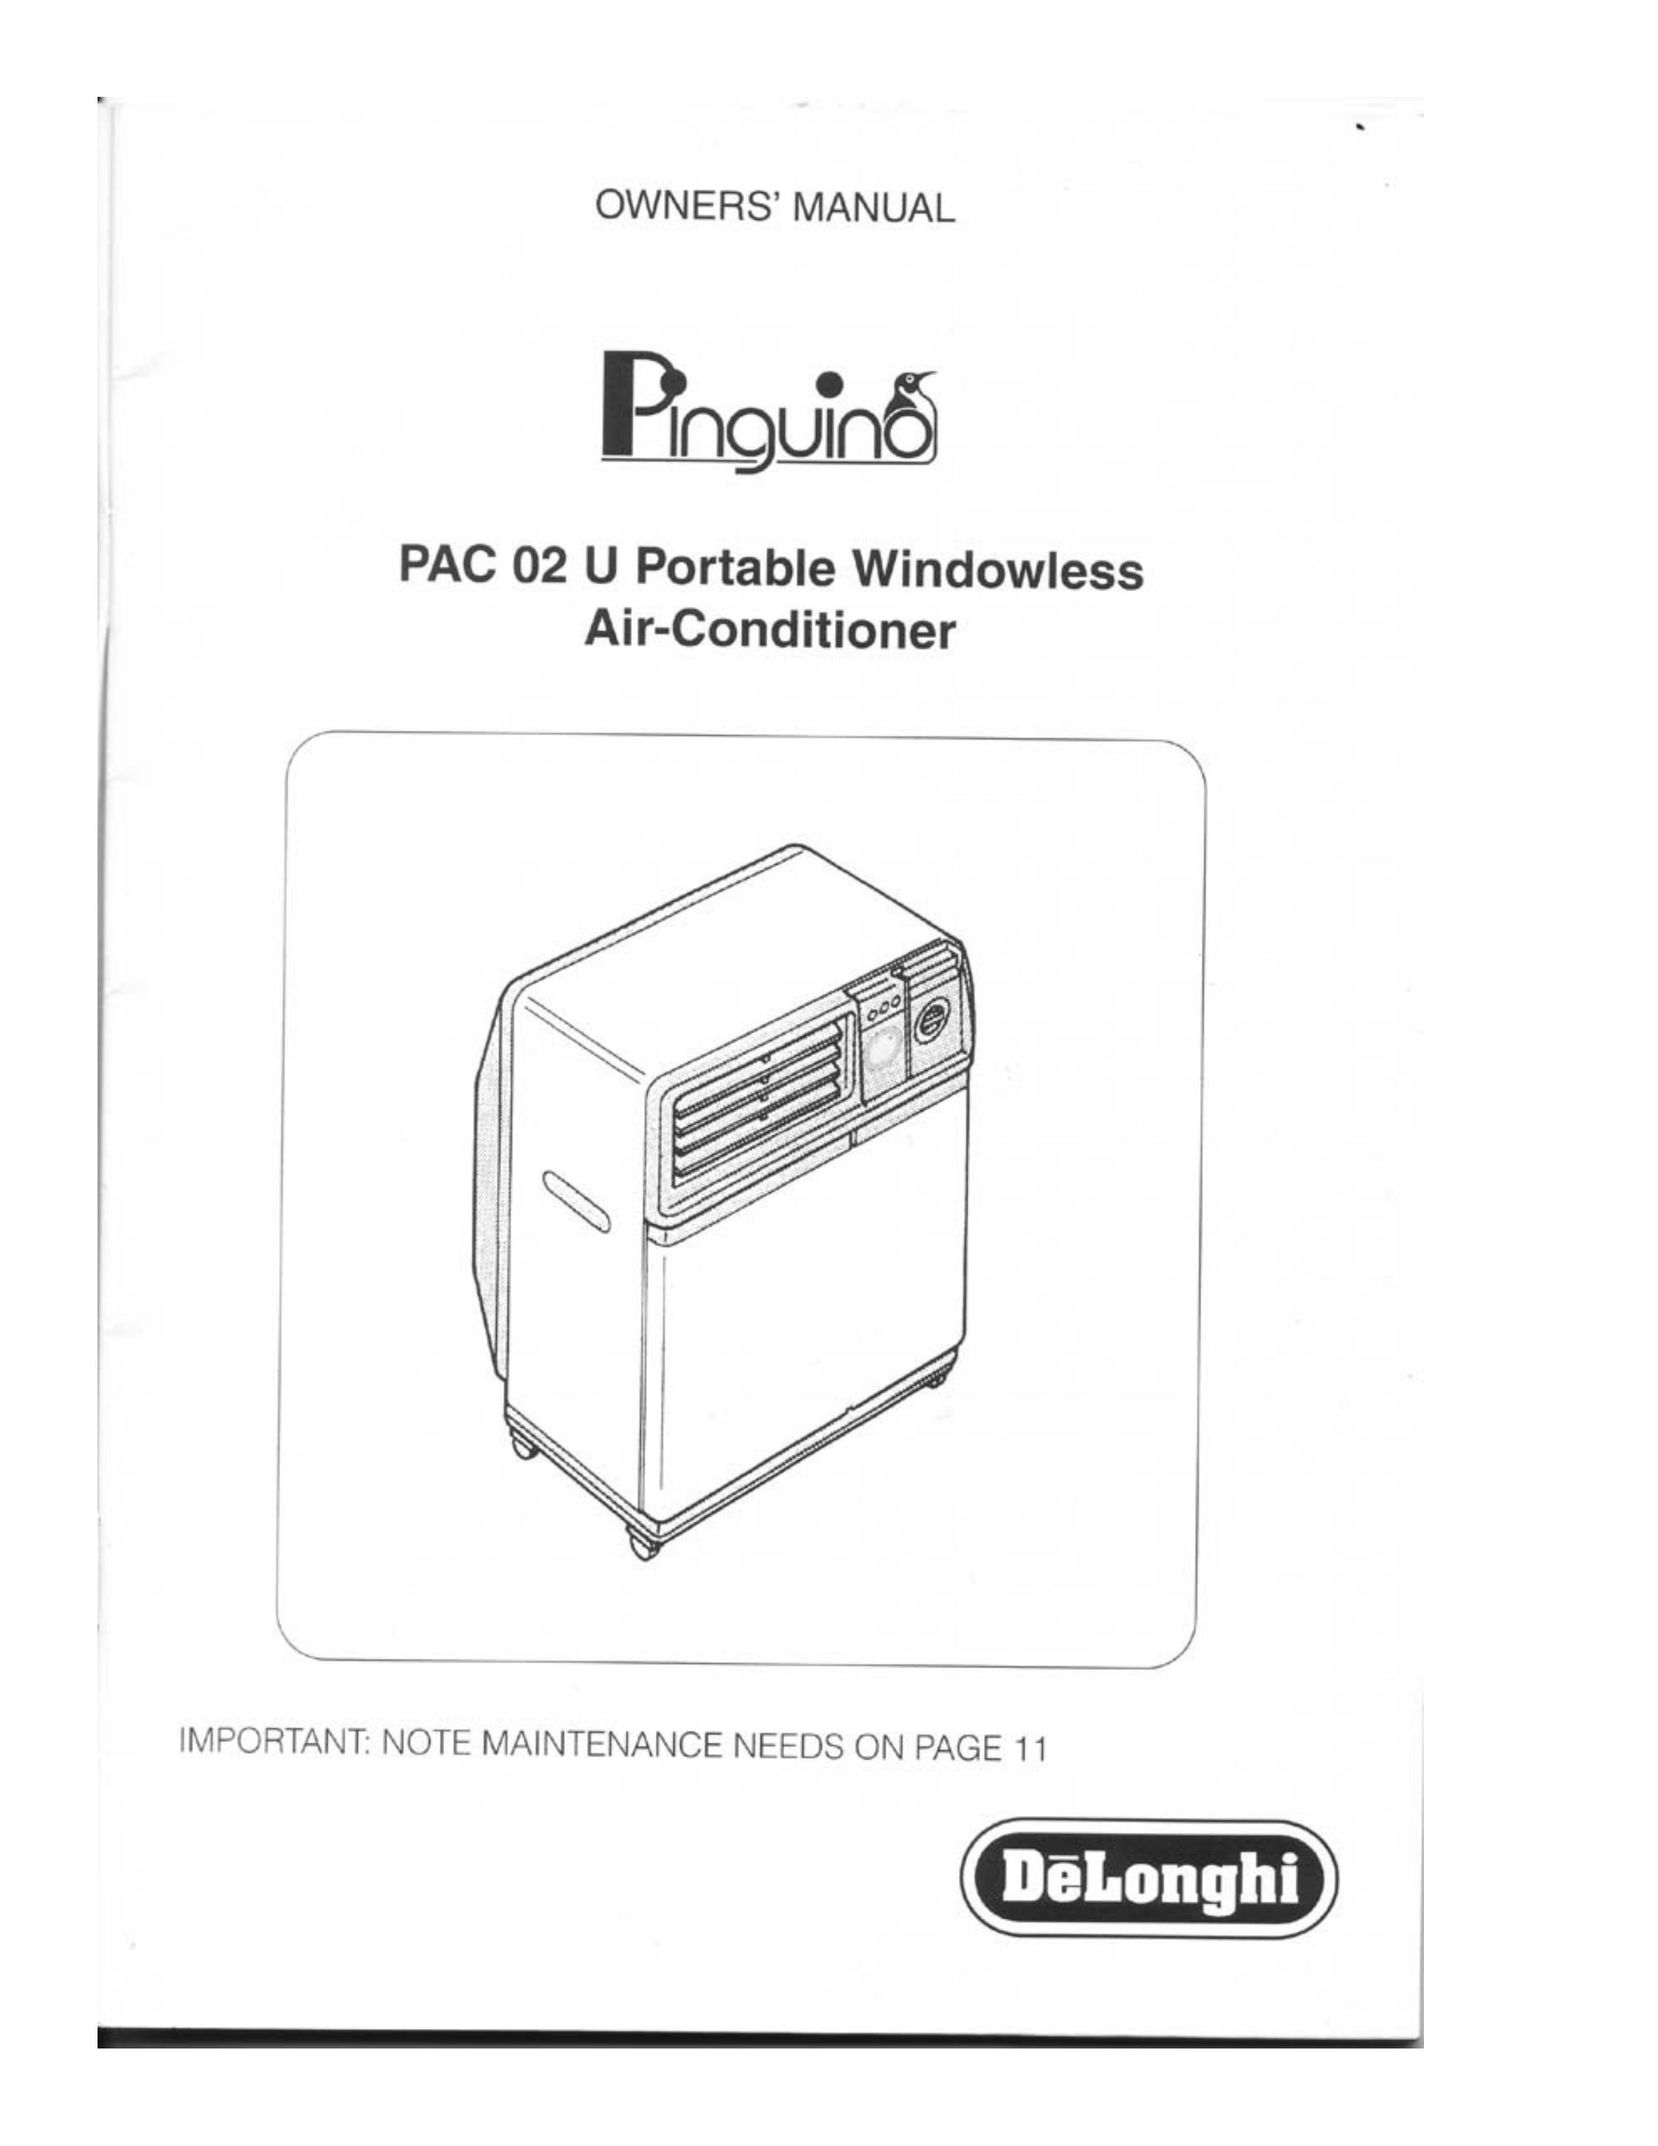 DeLonghi PAC 02 Air Conditioner User Manual